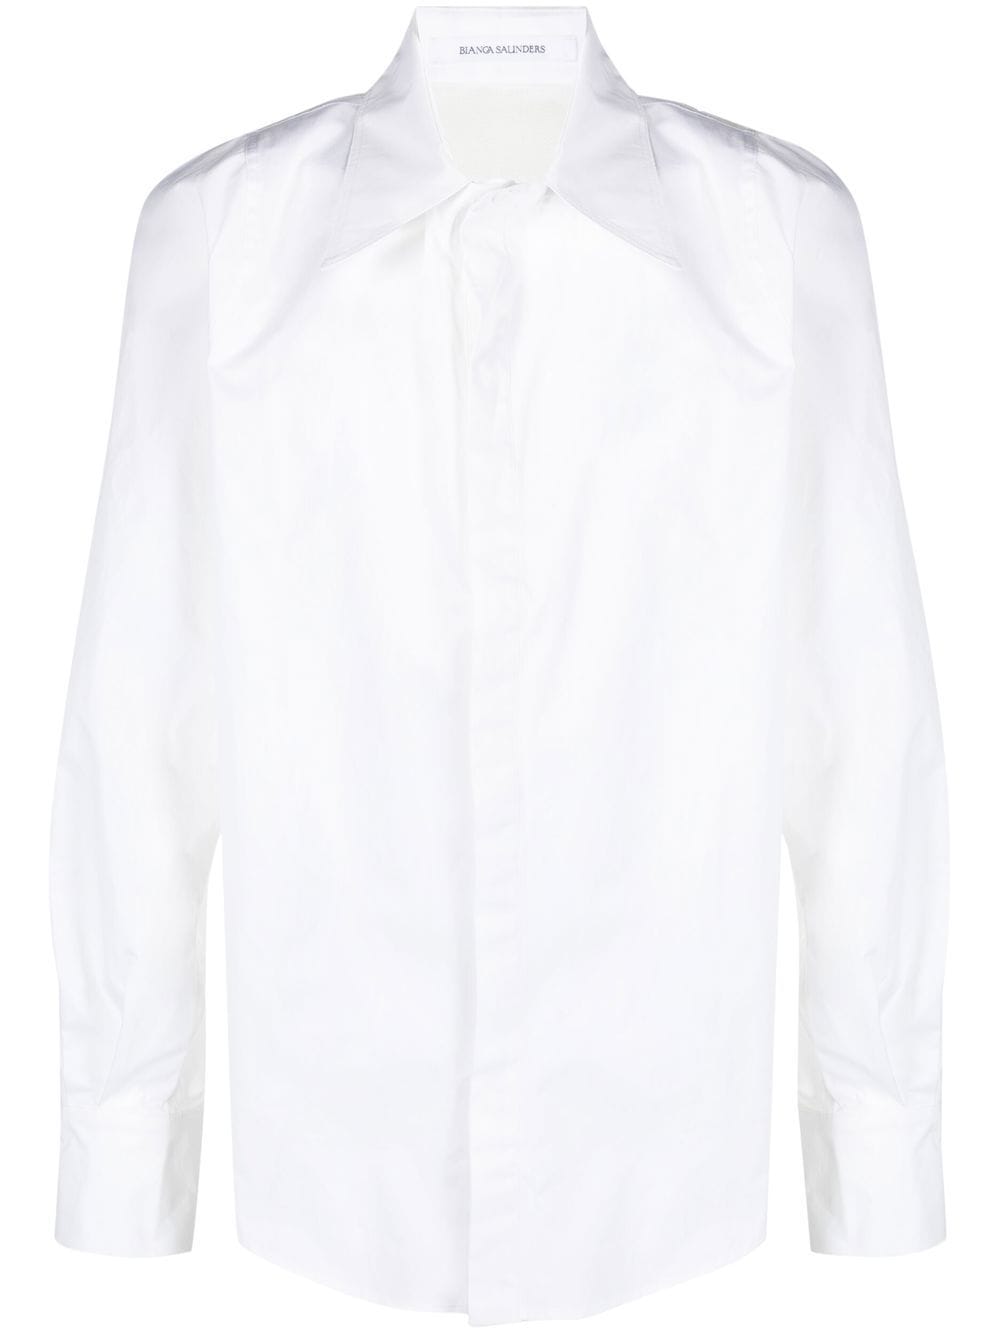 Bianca Saunders White Row Back Long Sleeve Shirt